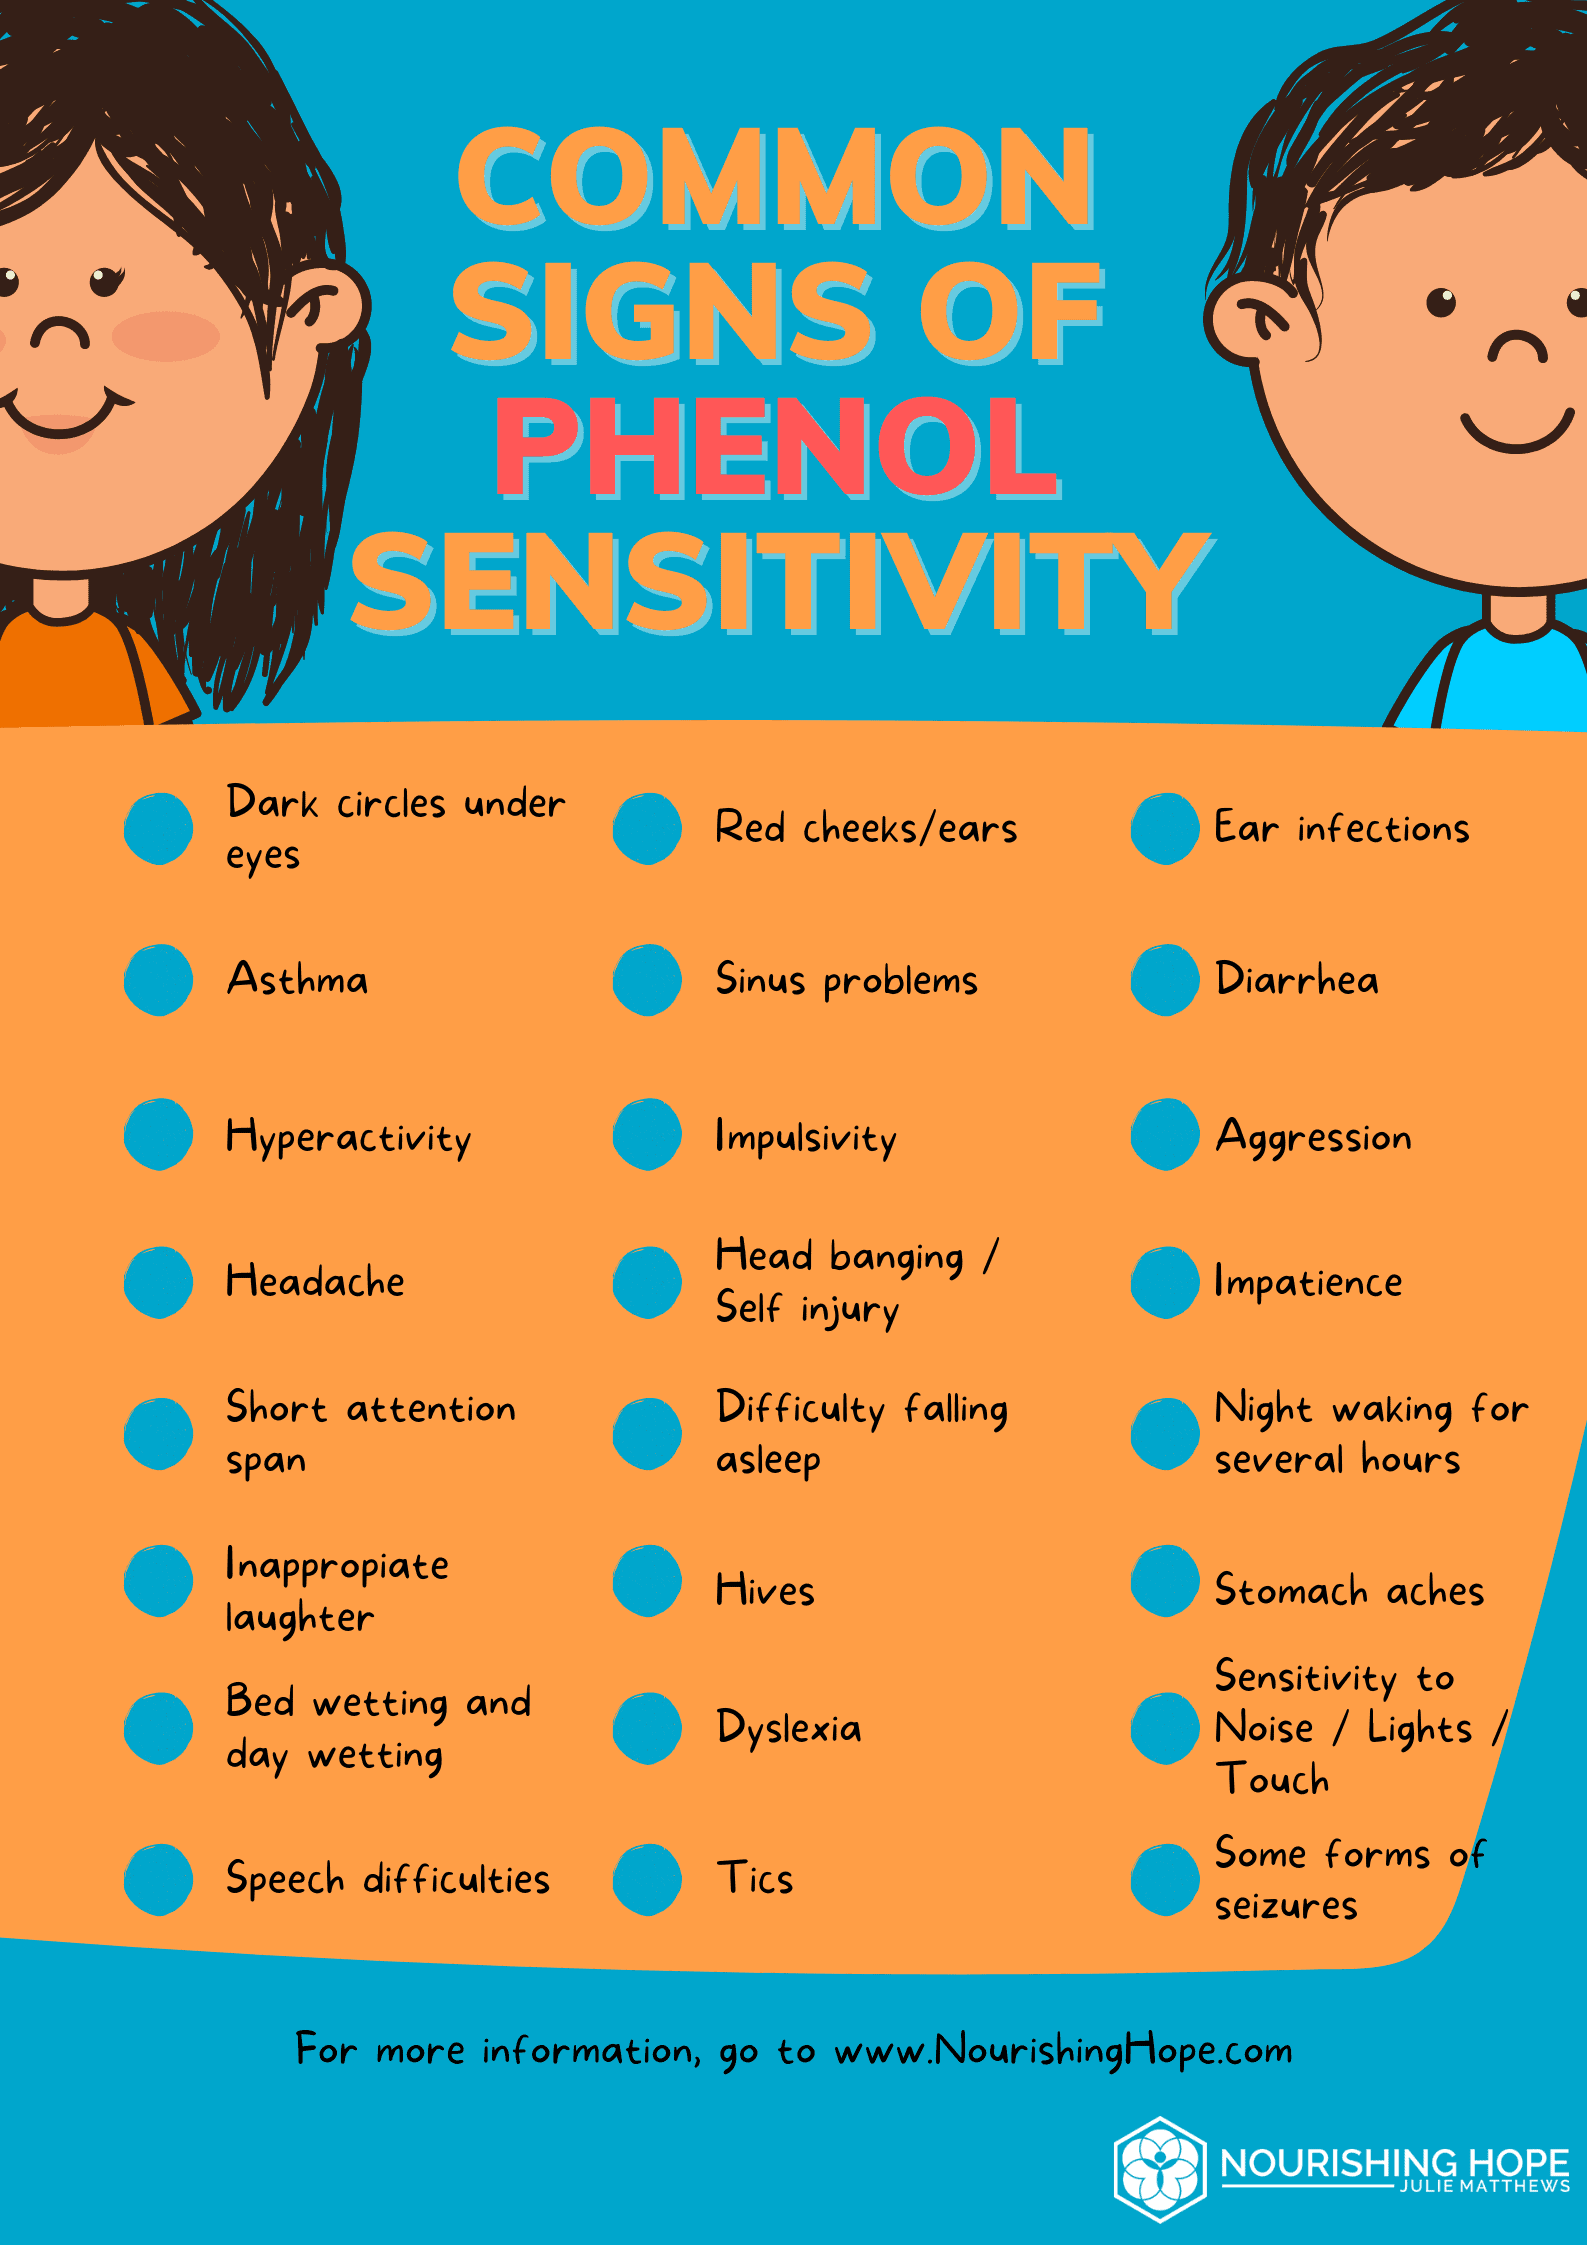 Common Phenol Sensitivity Signs